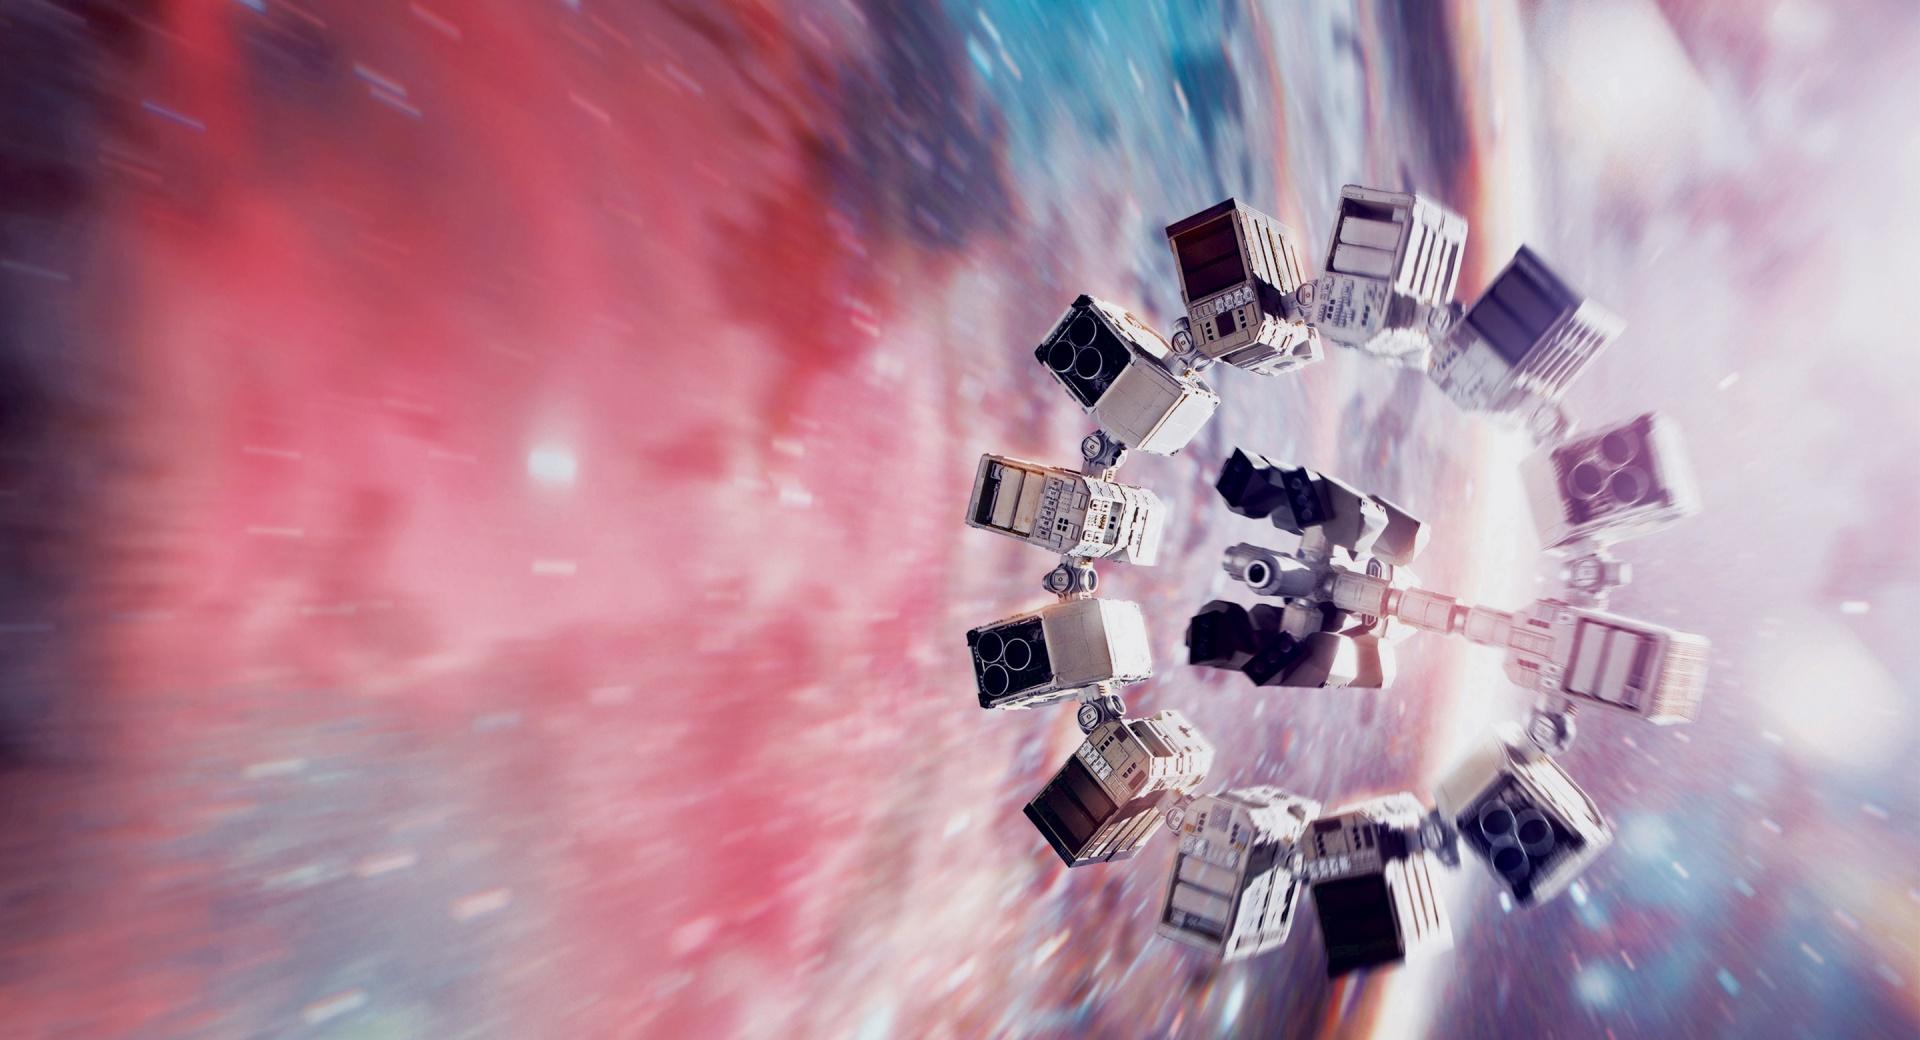 Interstellar Endurance Spacecraft wallpapers HD quality